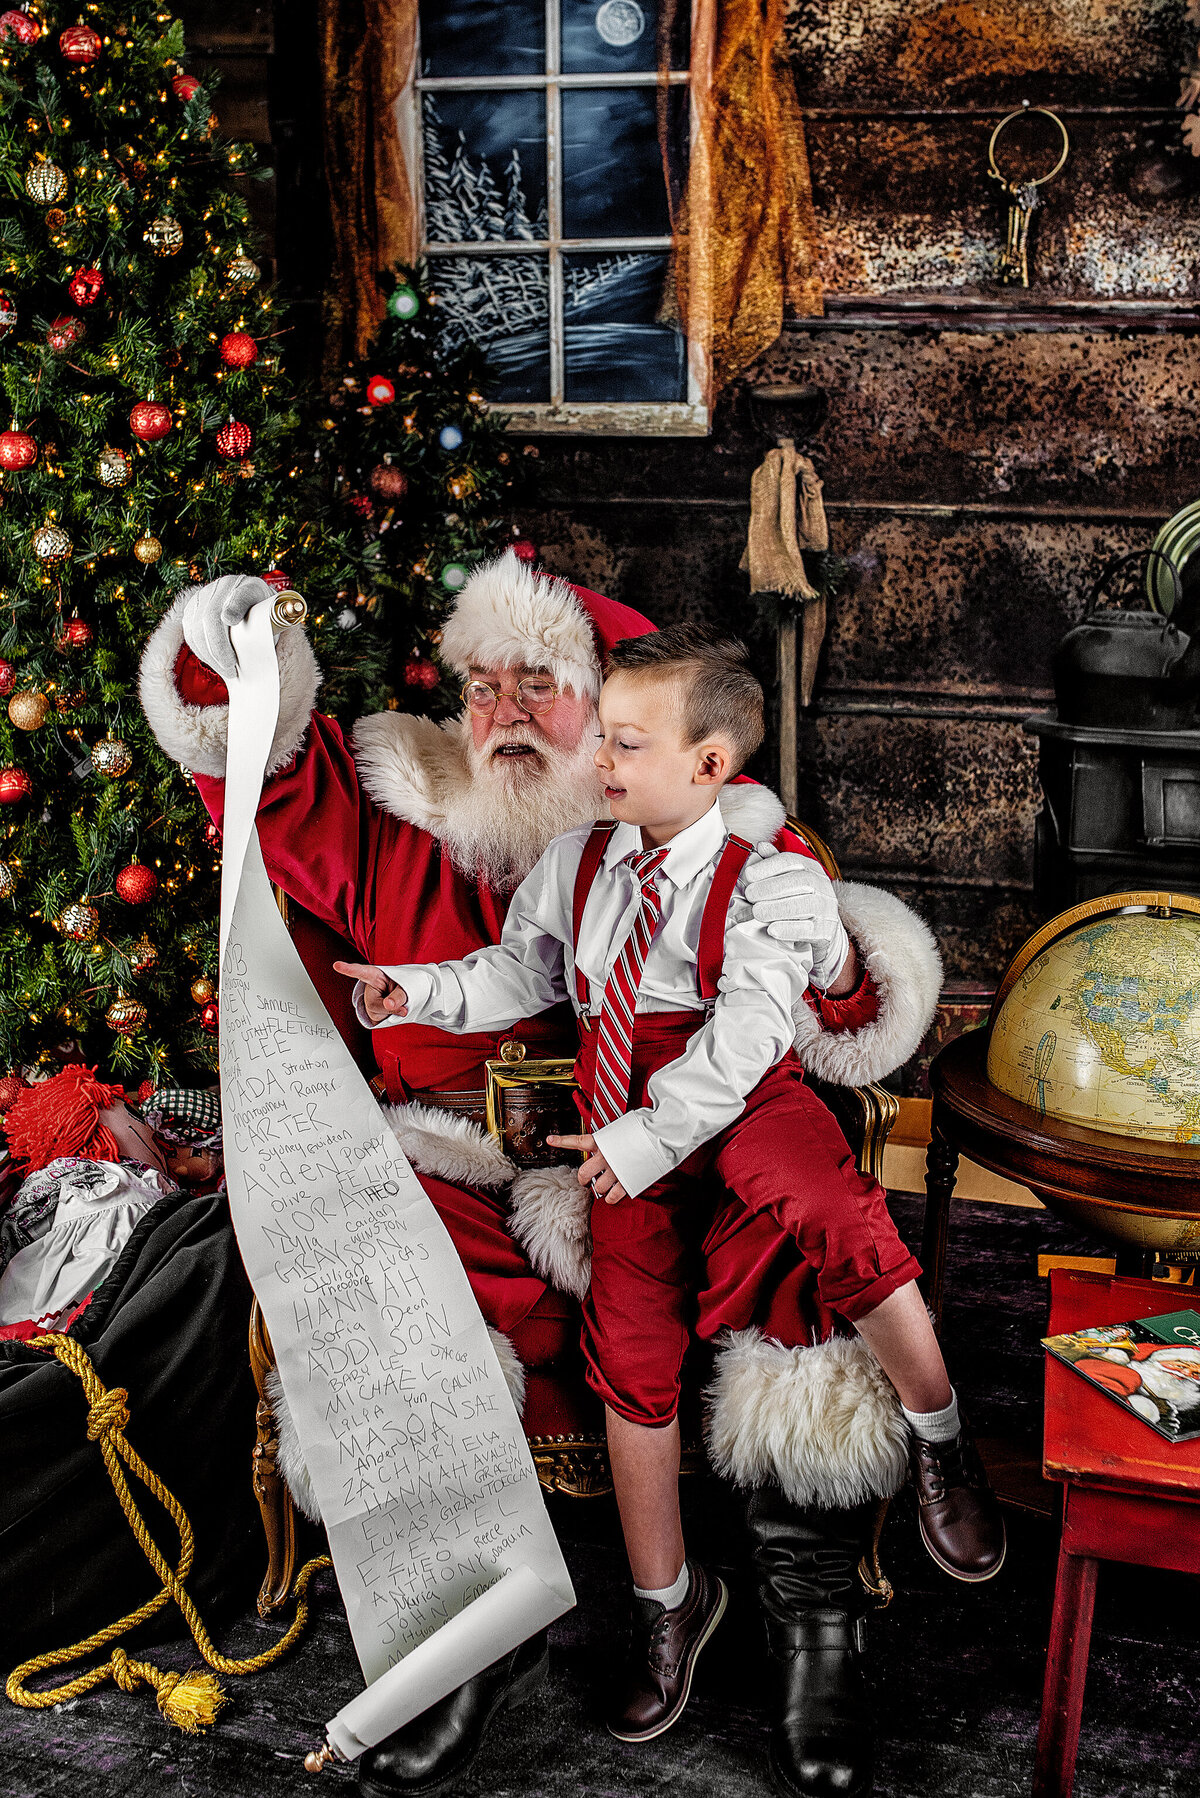 Santa and Boy with nice list